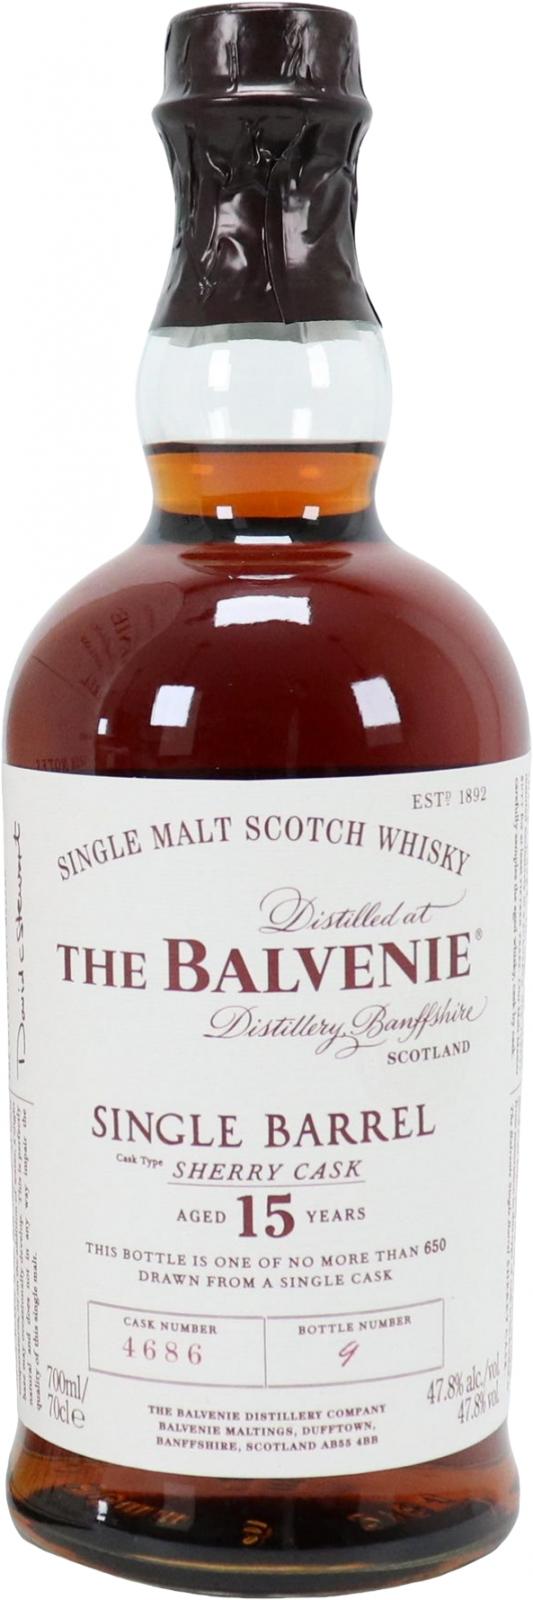 Balvenie 15yo Single Barrel Sherry Cask #4686 47.8% 700ml